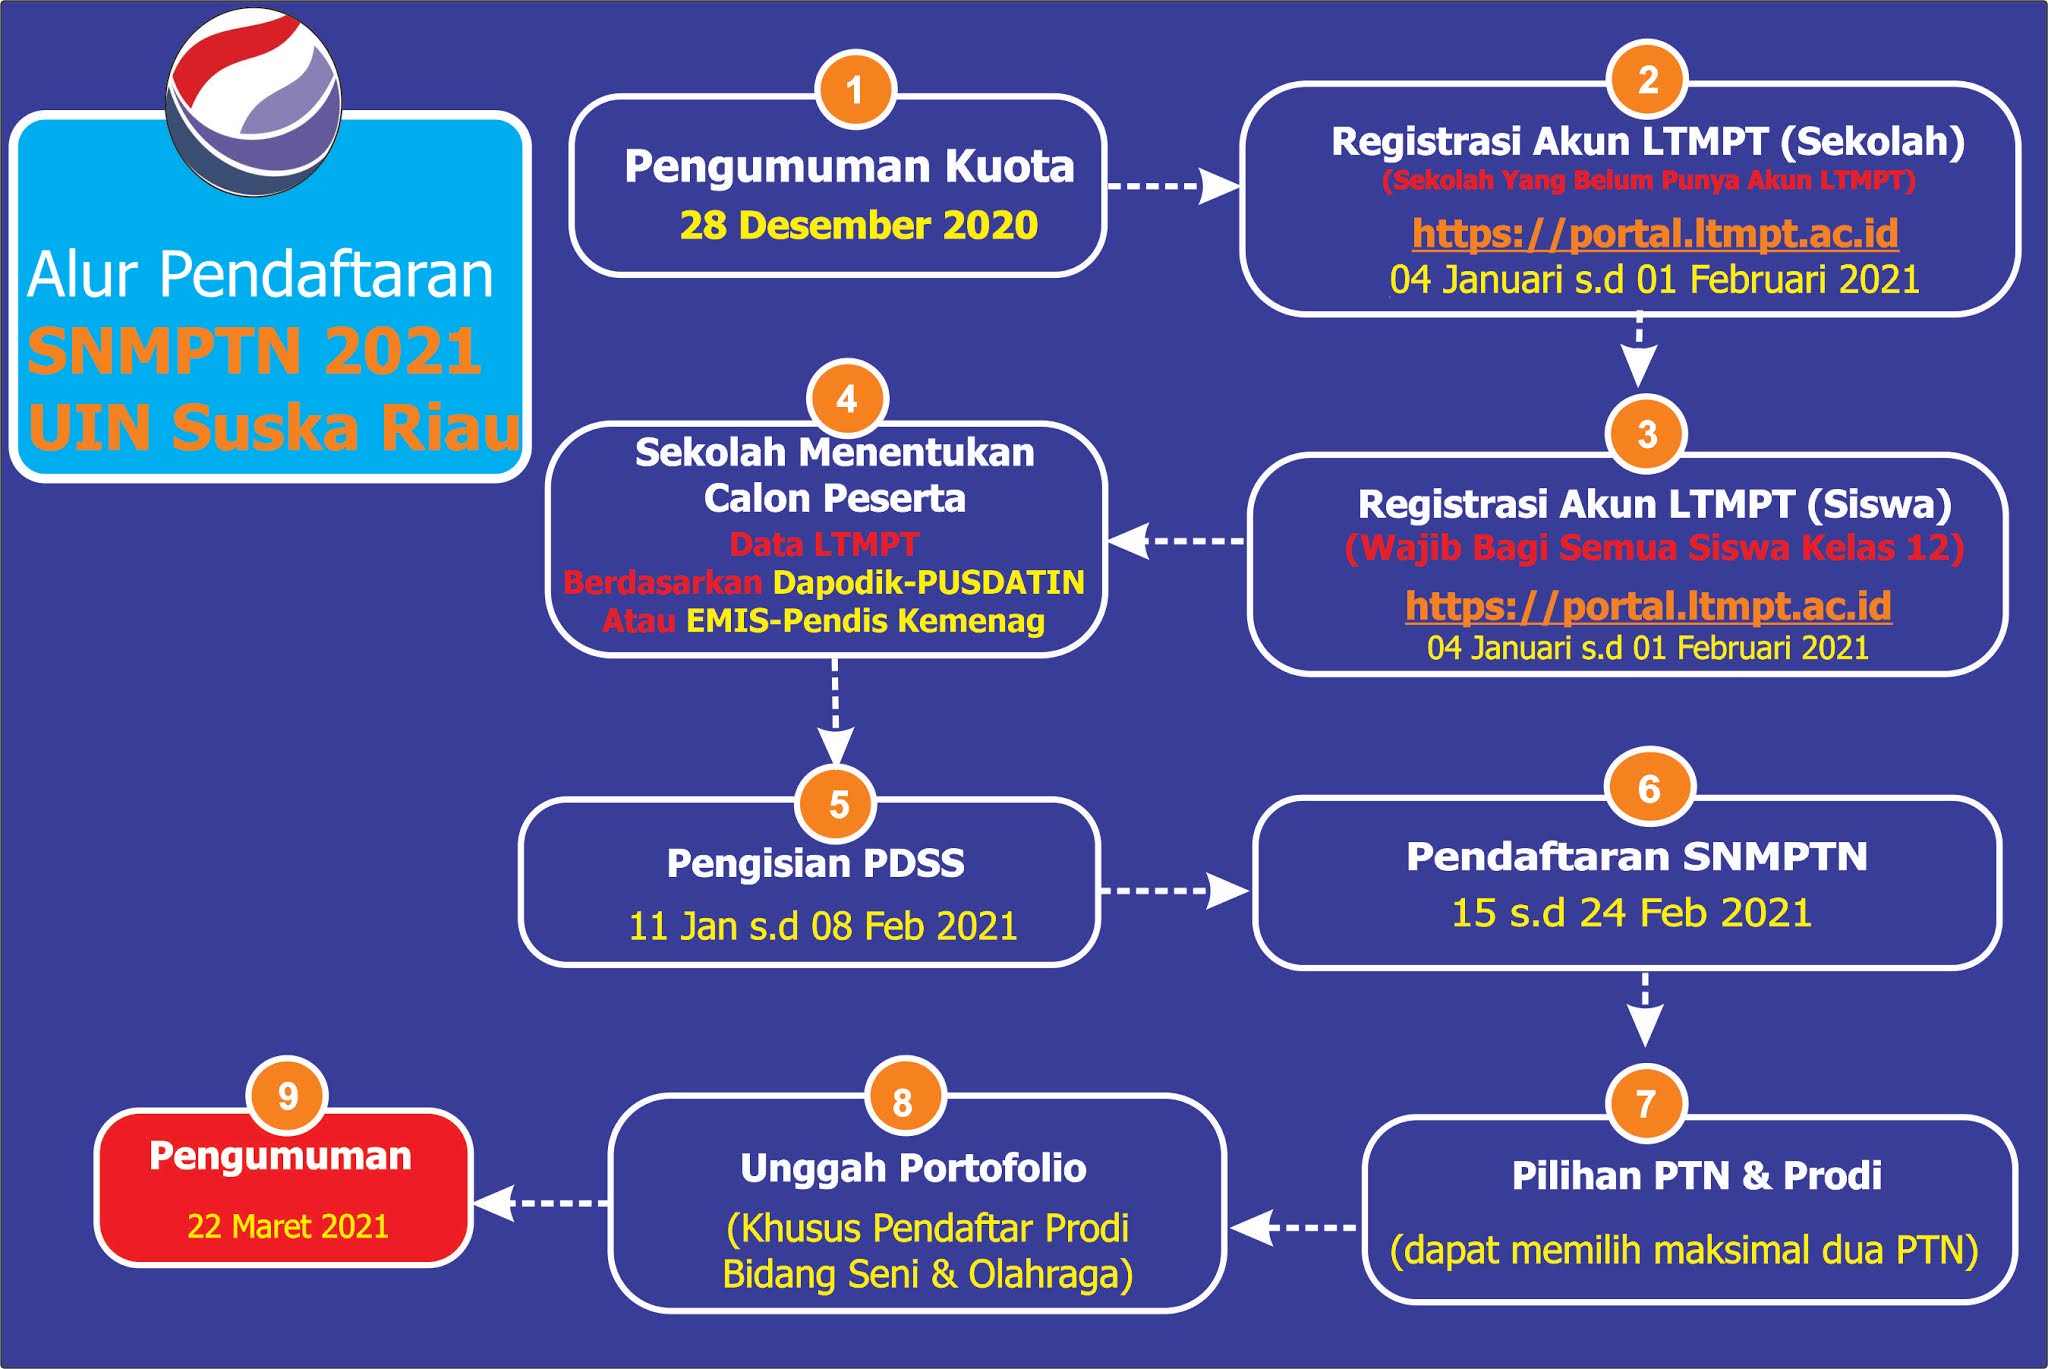 Pendaftaran Mahasiswa Baru Uin Suska Riau D3 S1 S2 S3 T A 2021 2022 Pendaftaran Mahasiswa